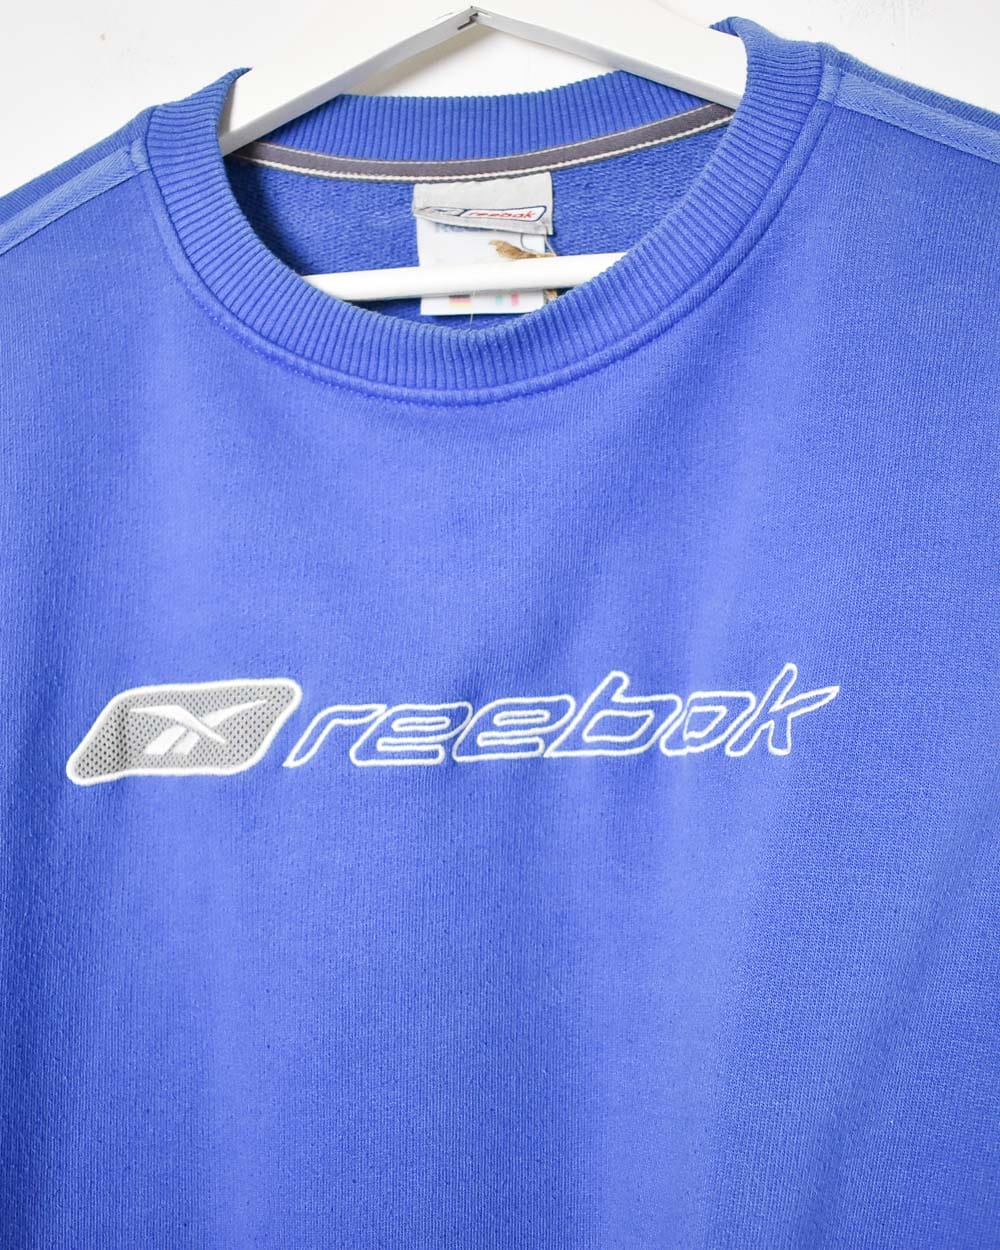 Blue Reebok Sweatshirt - XX-Large